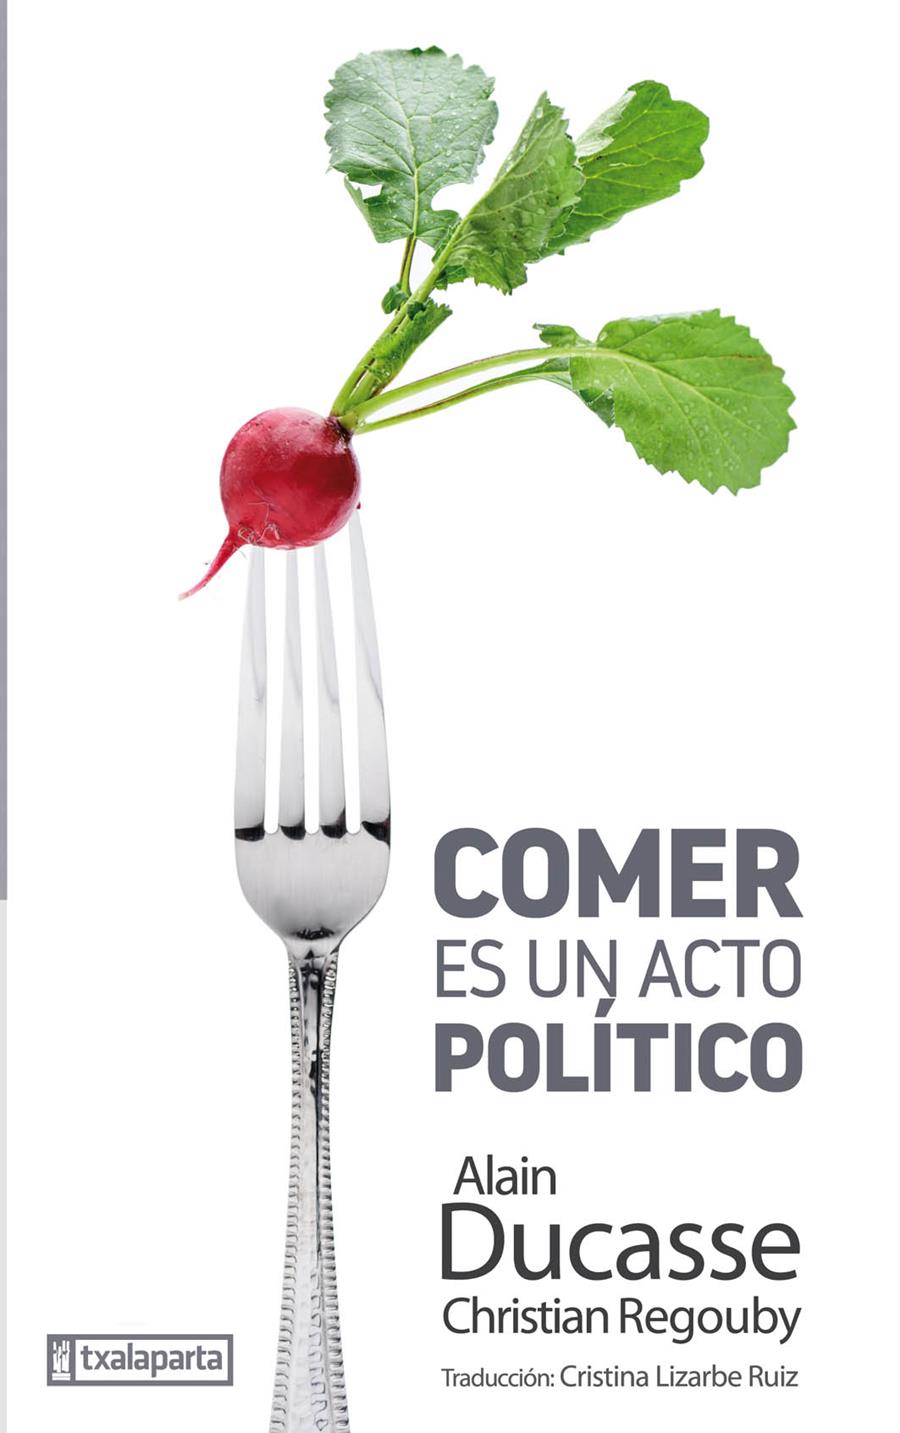 Comer es un acto político | Alain Ducasse / Christian Regouby